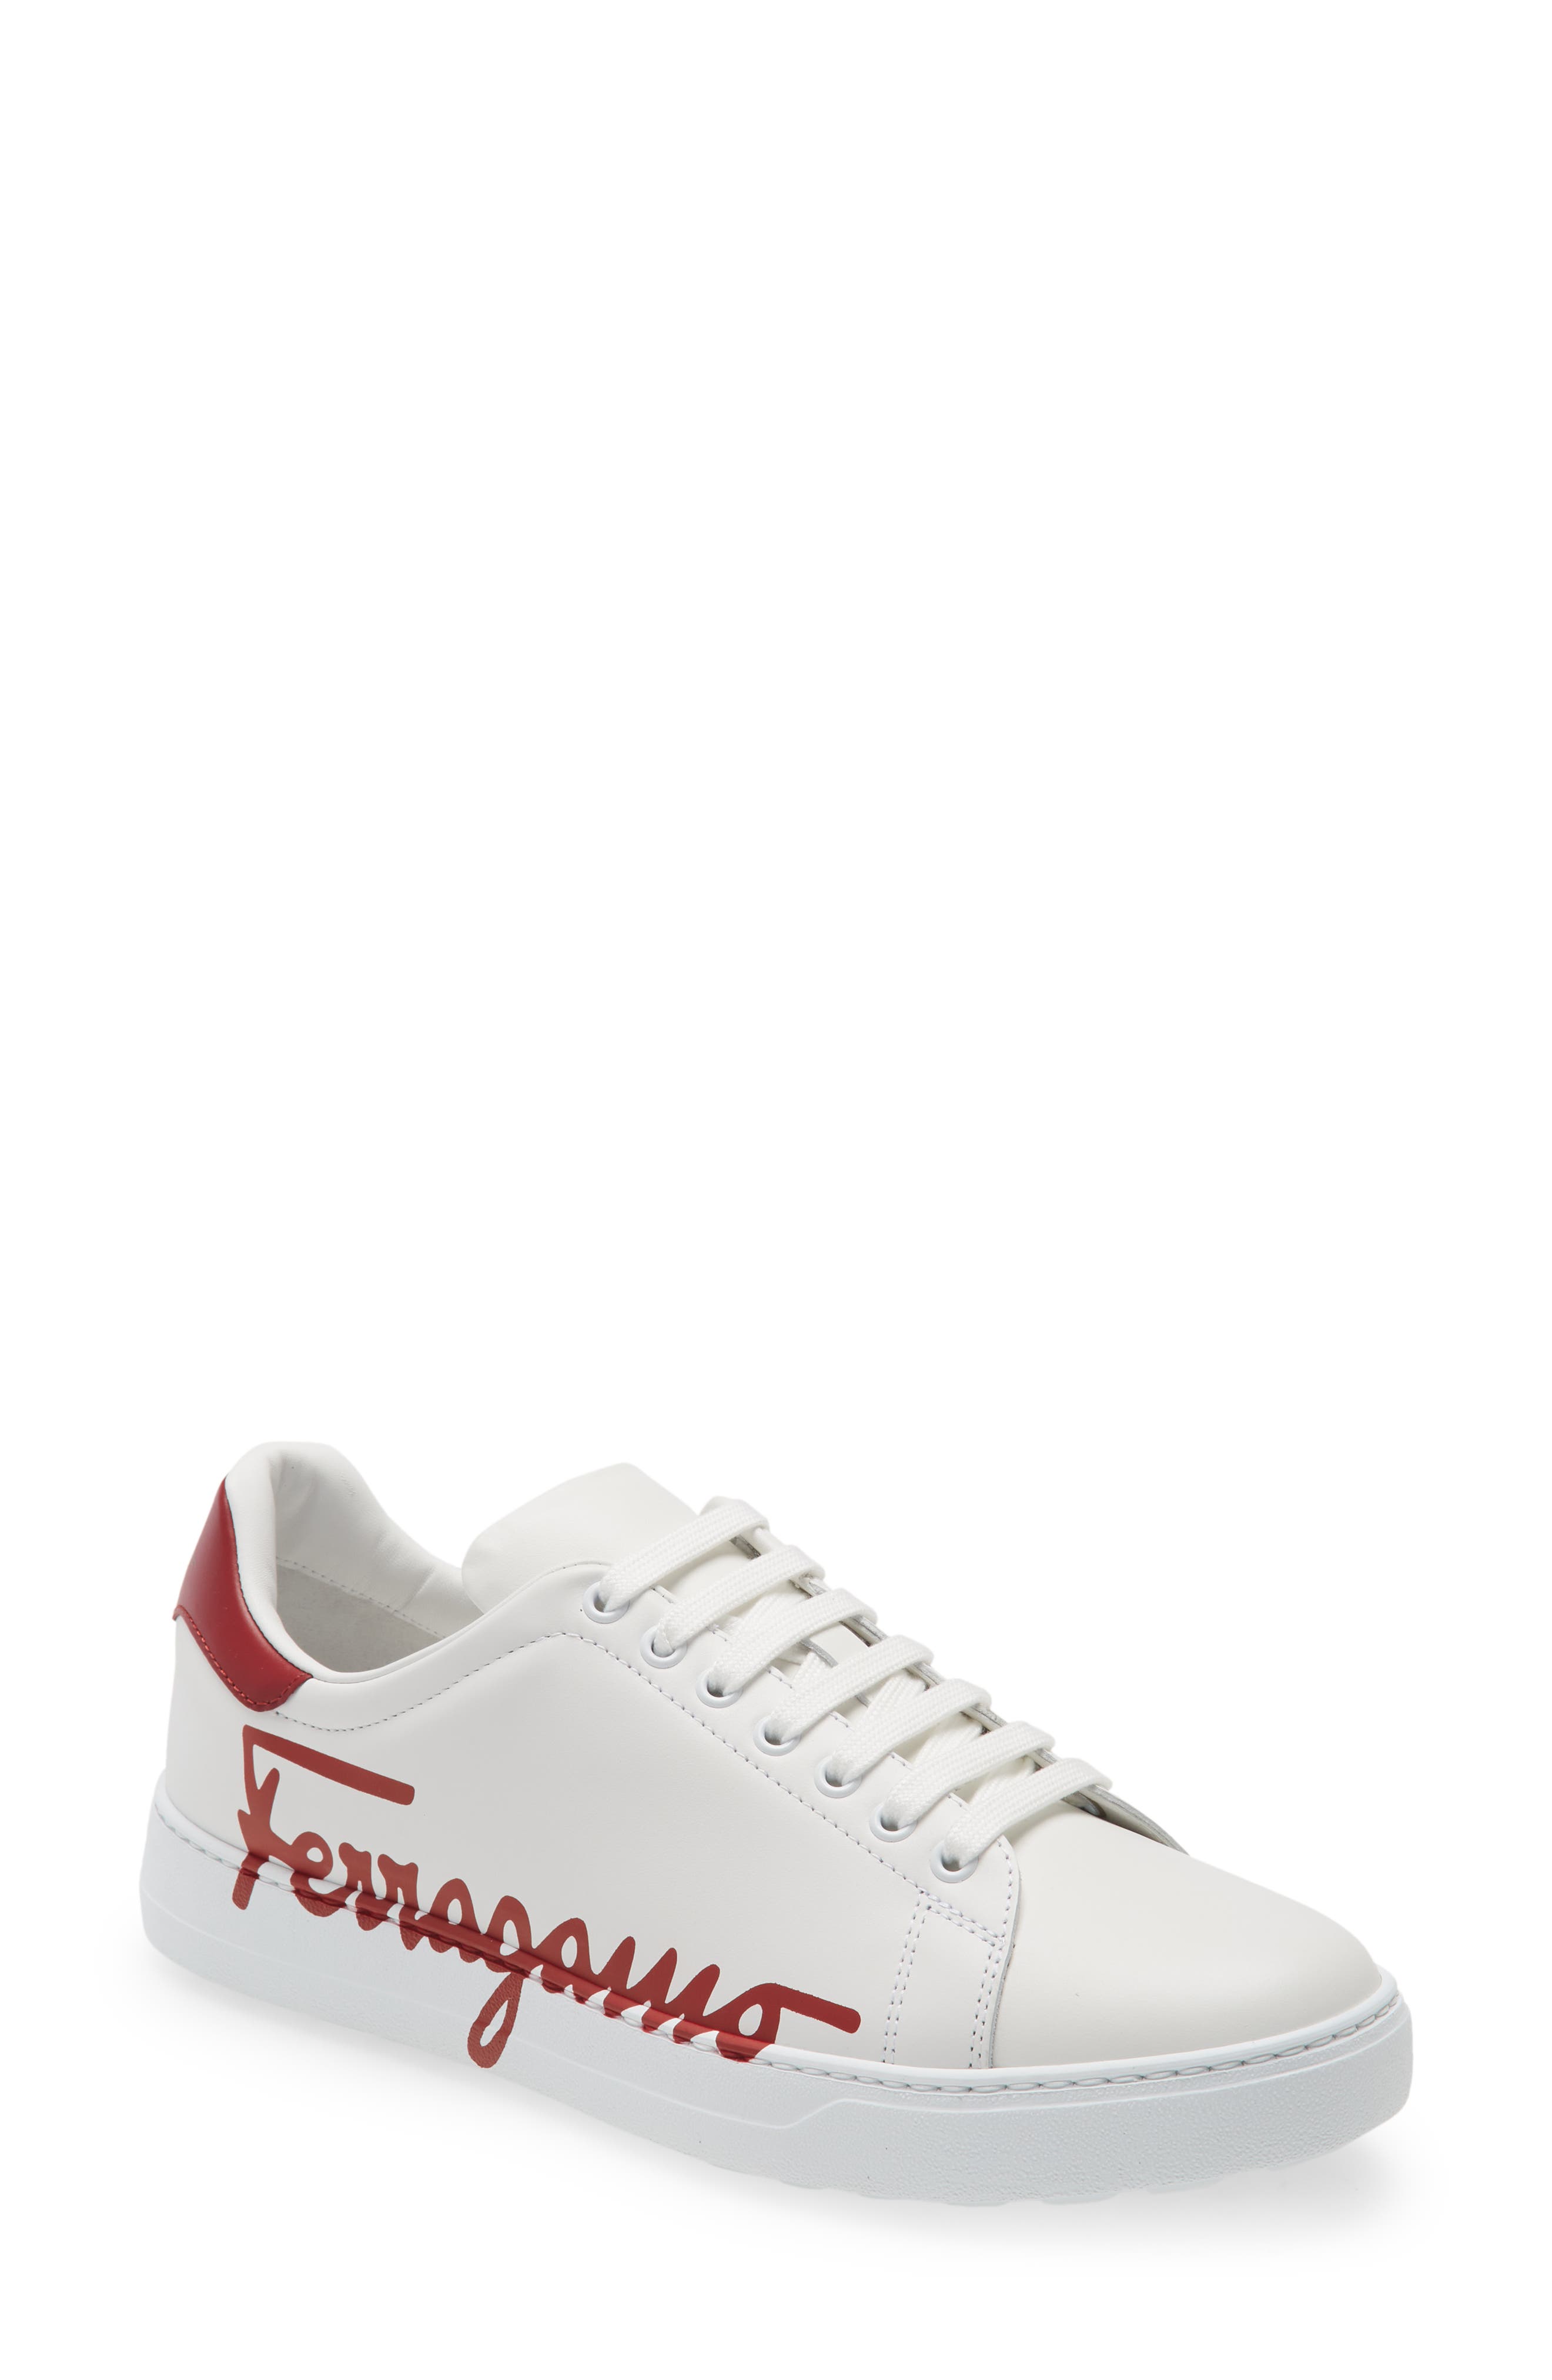 Salvatore Ferragamo Naruto Low Top Sneaker in Bianco/Red at Nordstrom, Size 12